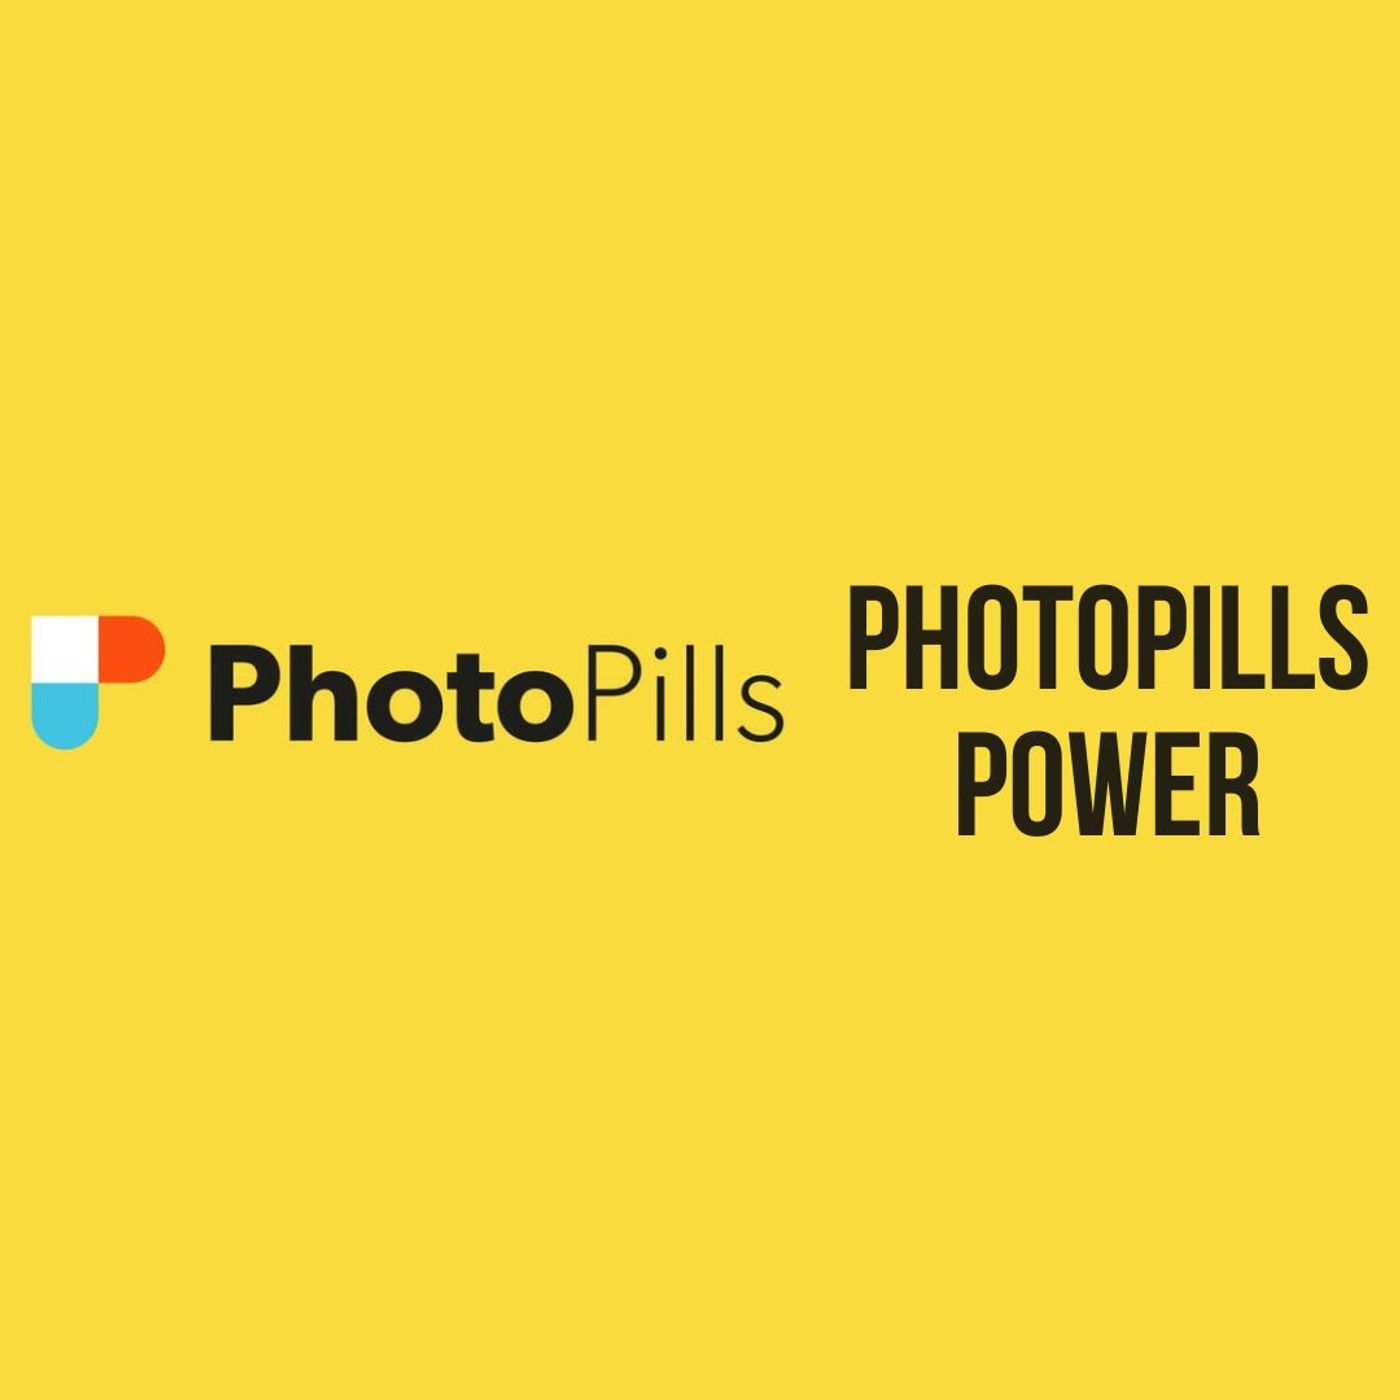 Photopills power